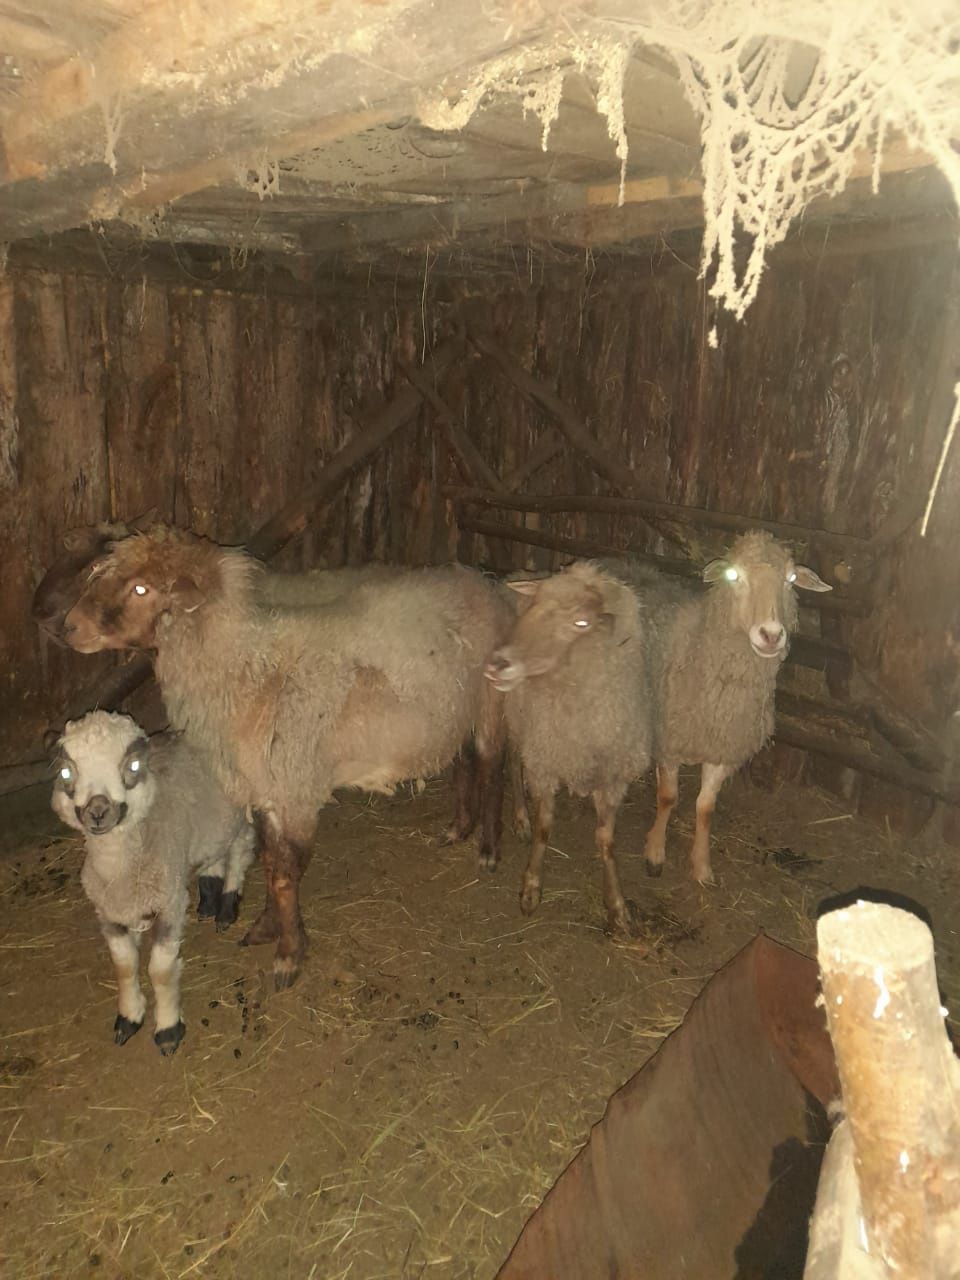 Продам овец 10авцематок с ягнятами,доильный аппарат,циркуляра.